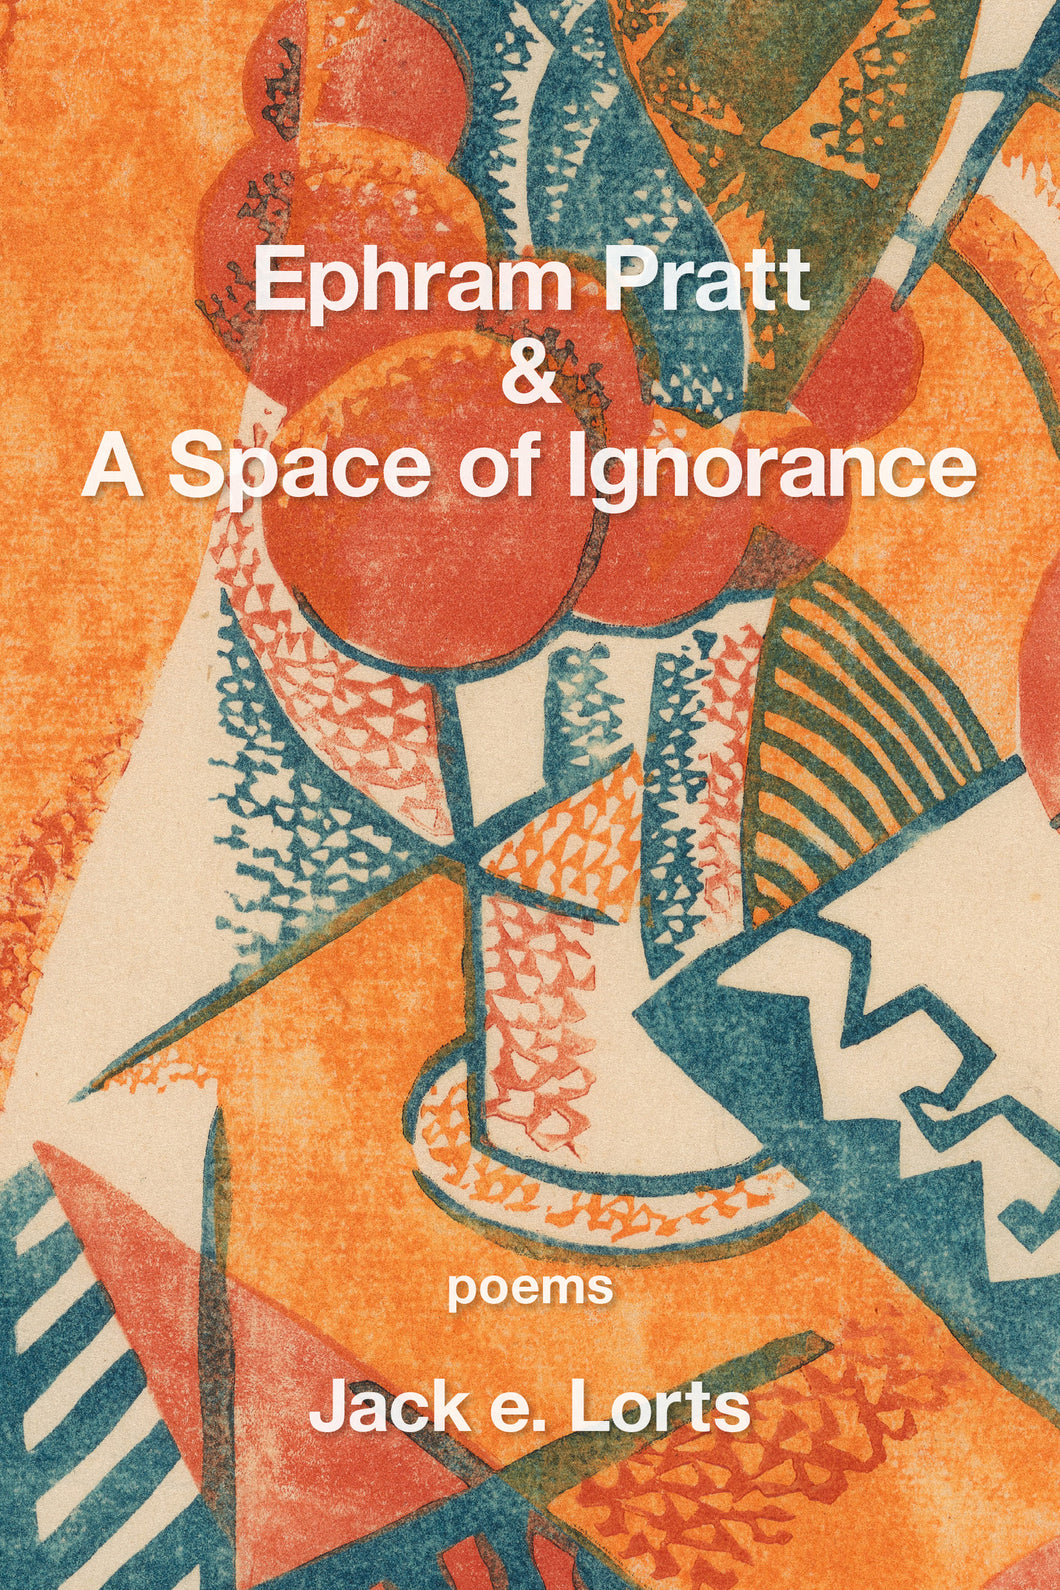 Ephram Pratt & A Space of Ignorance